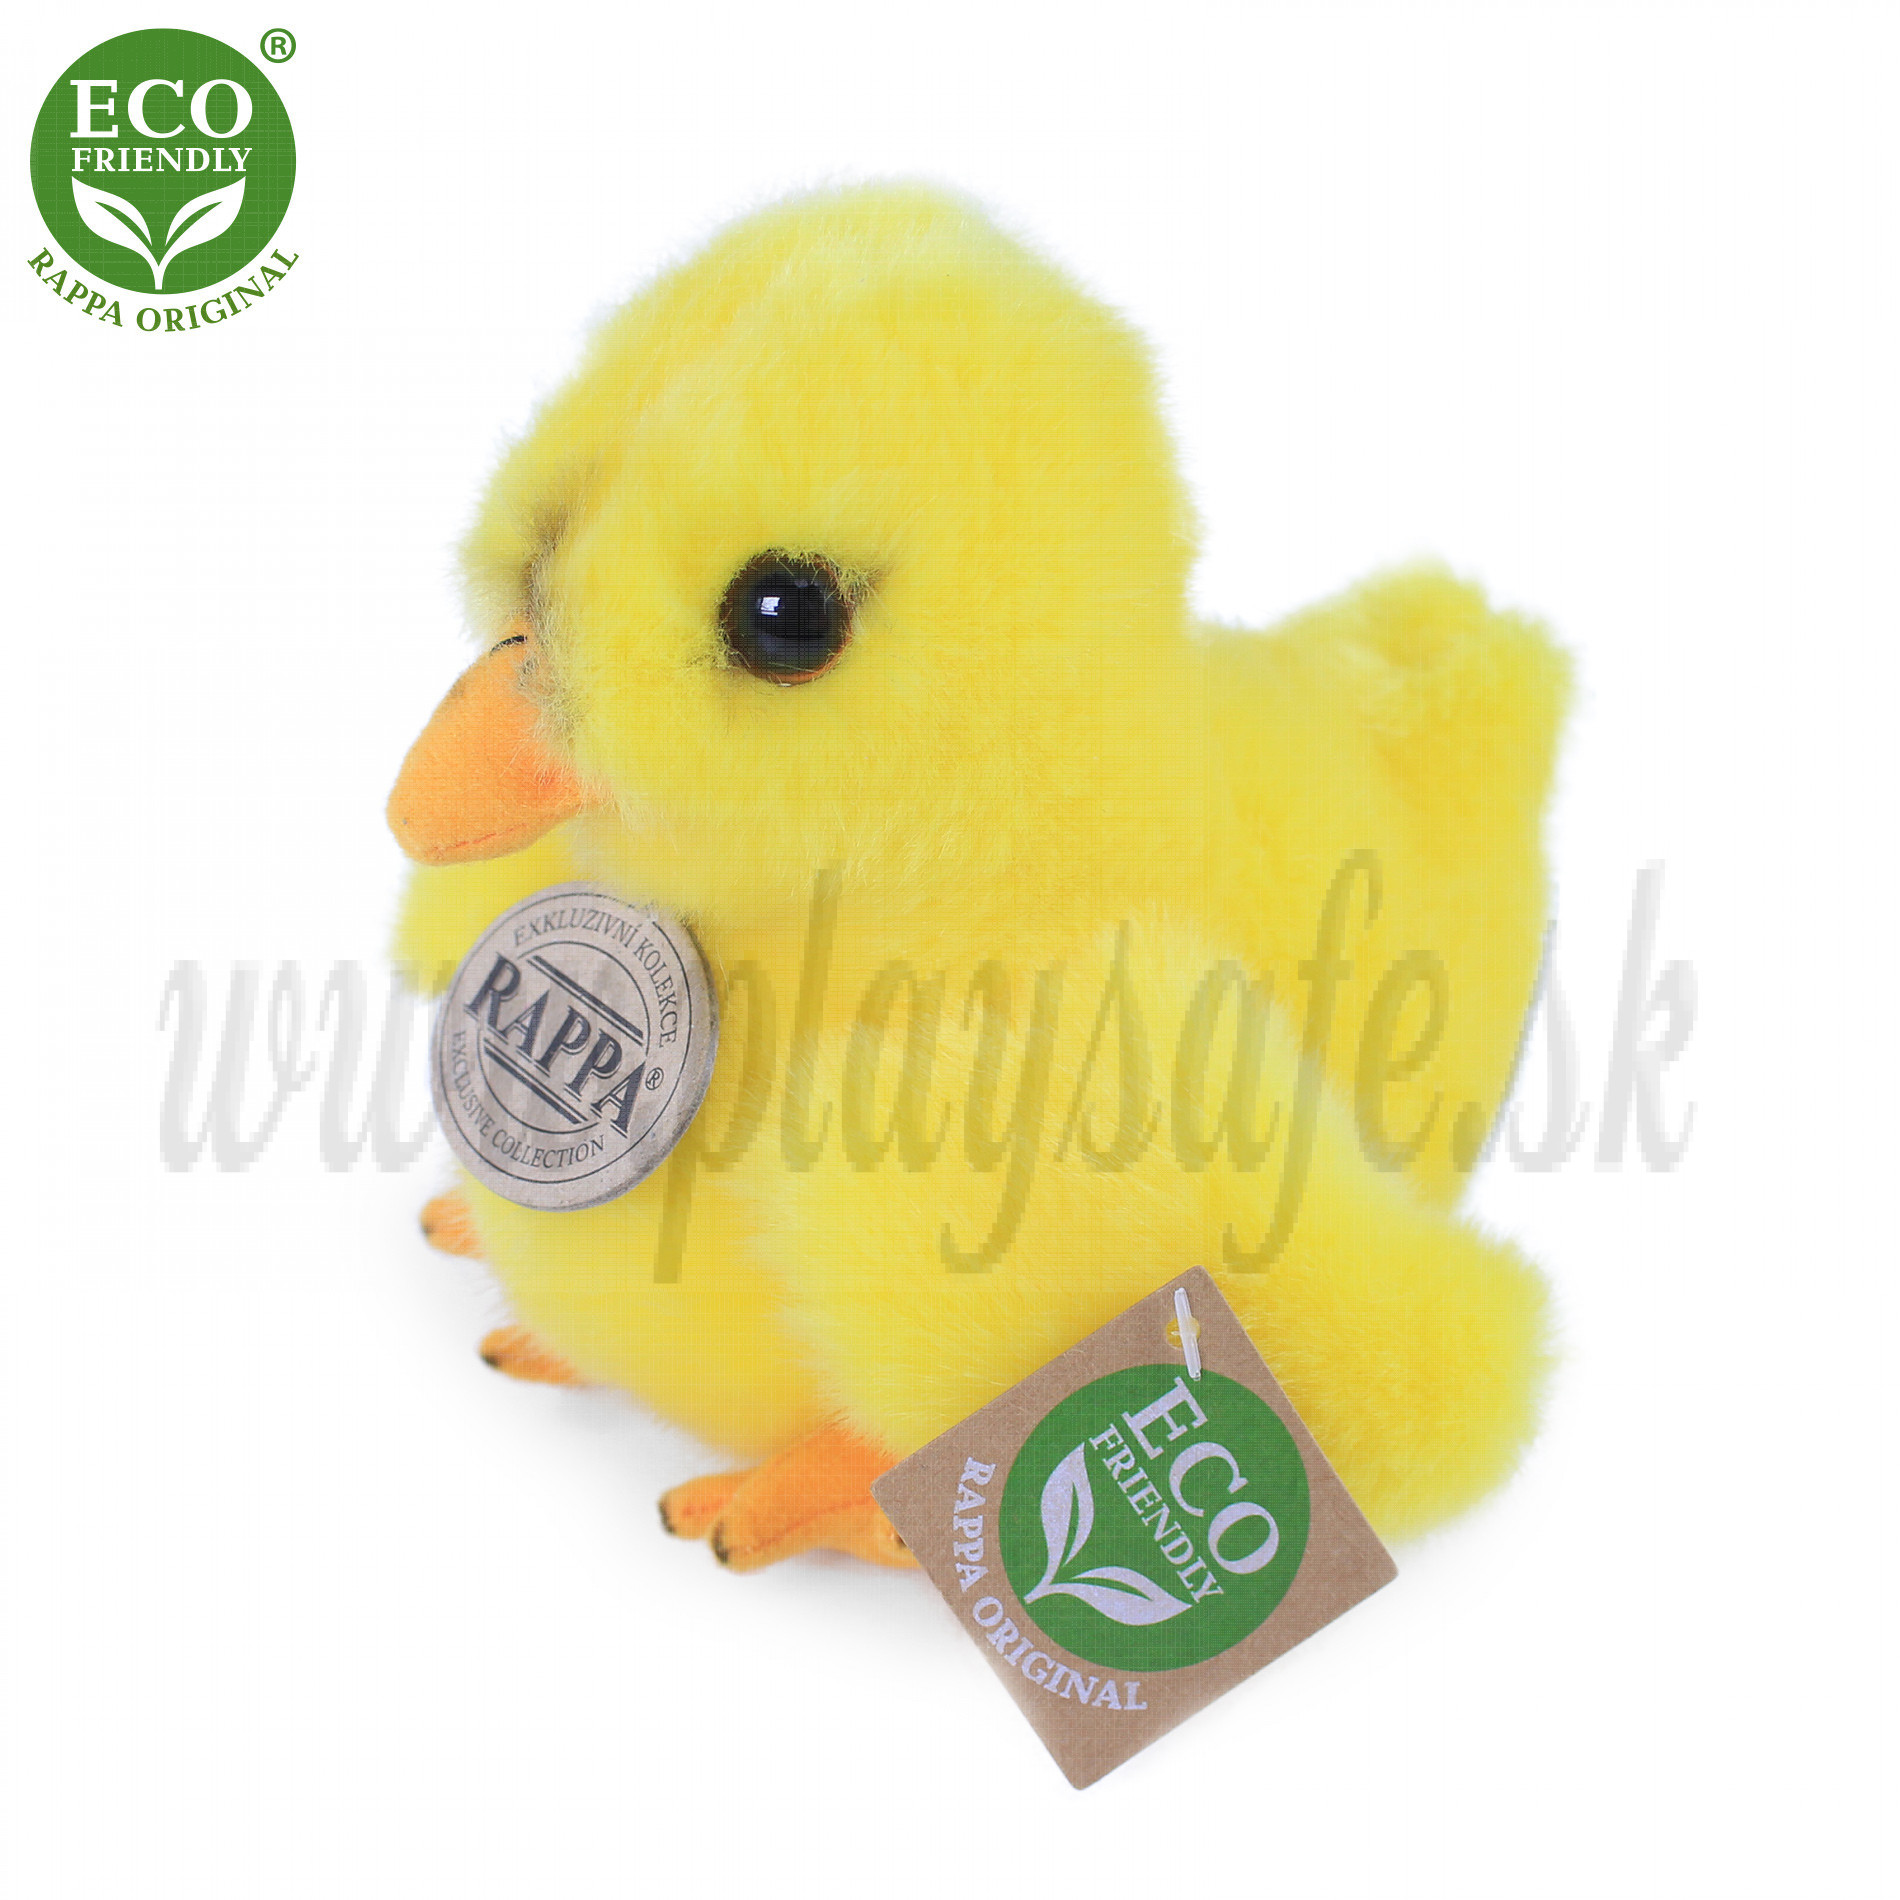 Eco-Friendly Soft toy Chick, 14cm